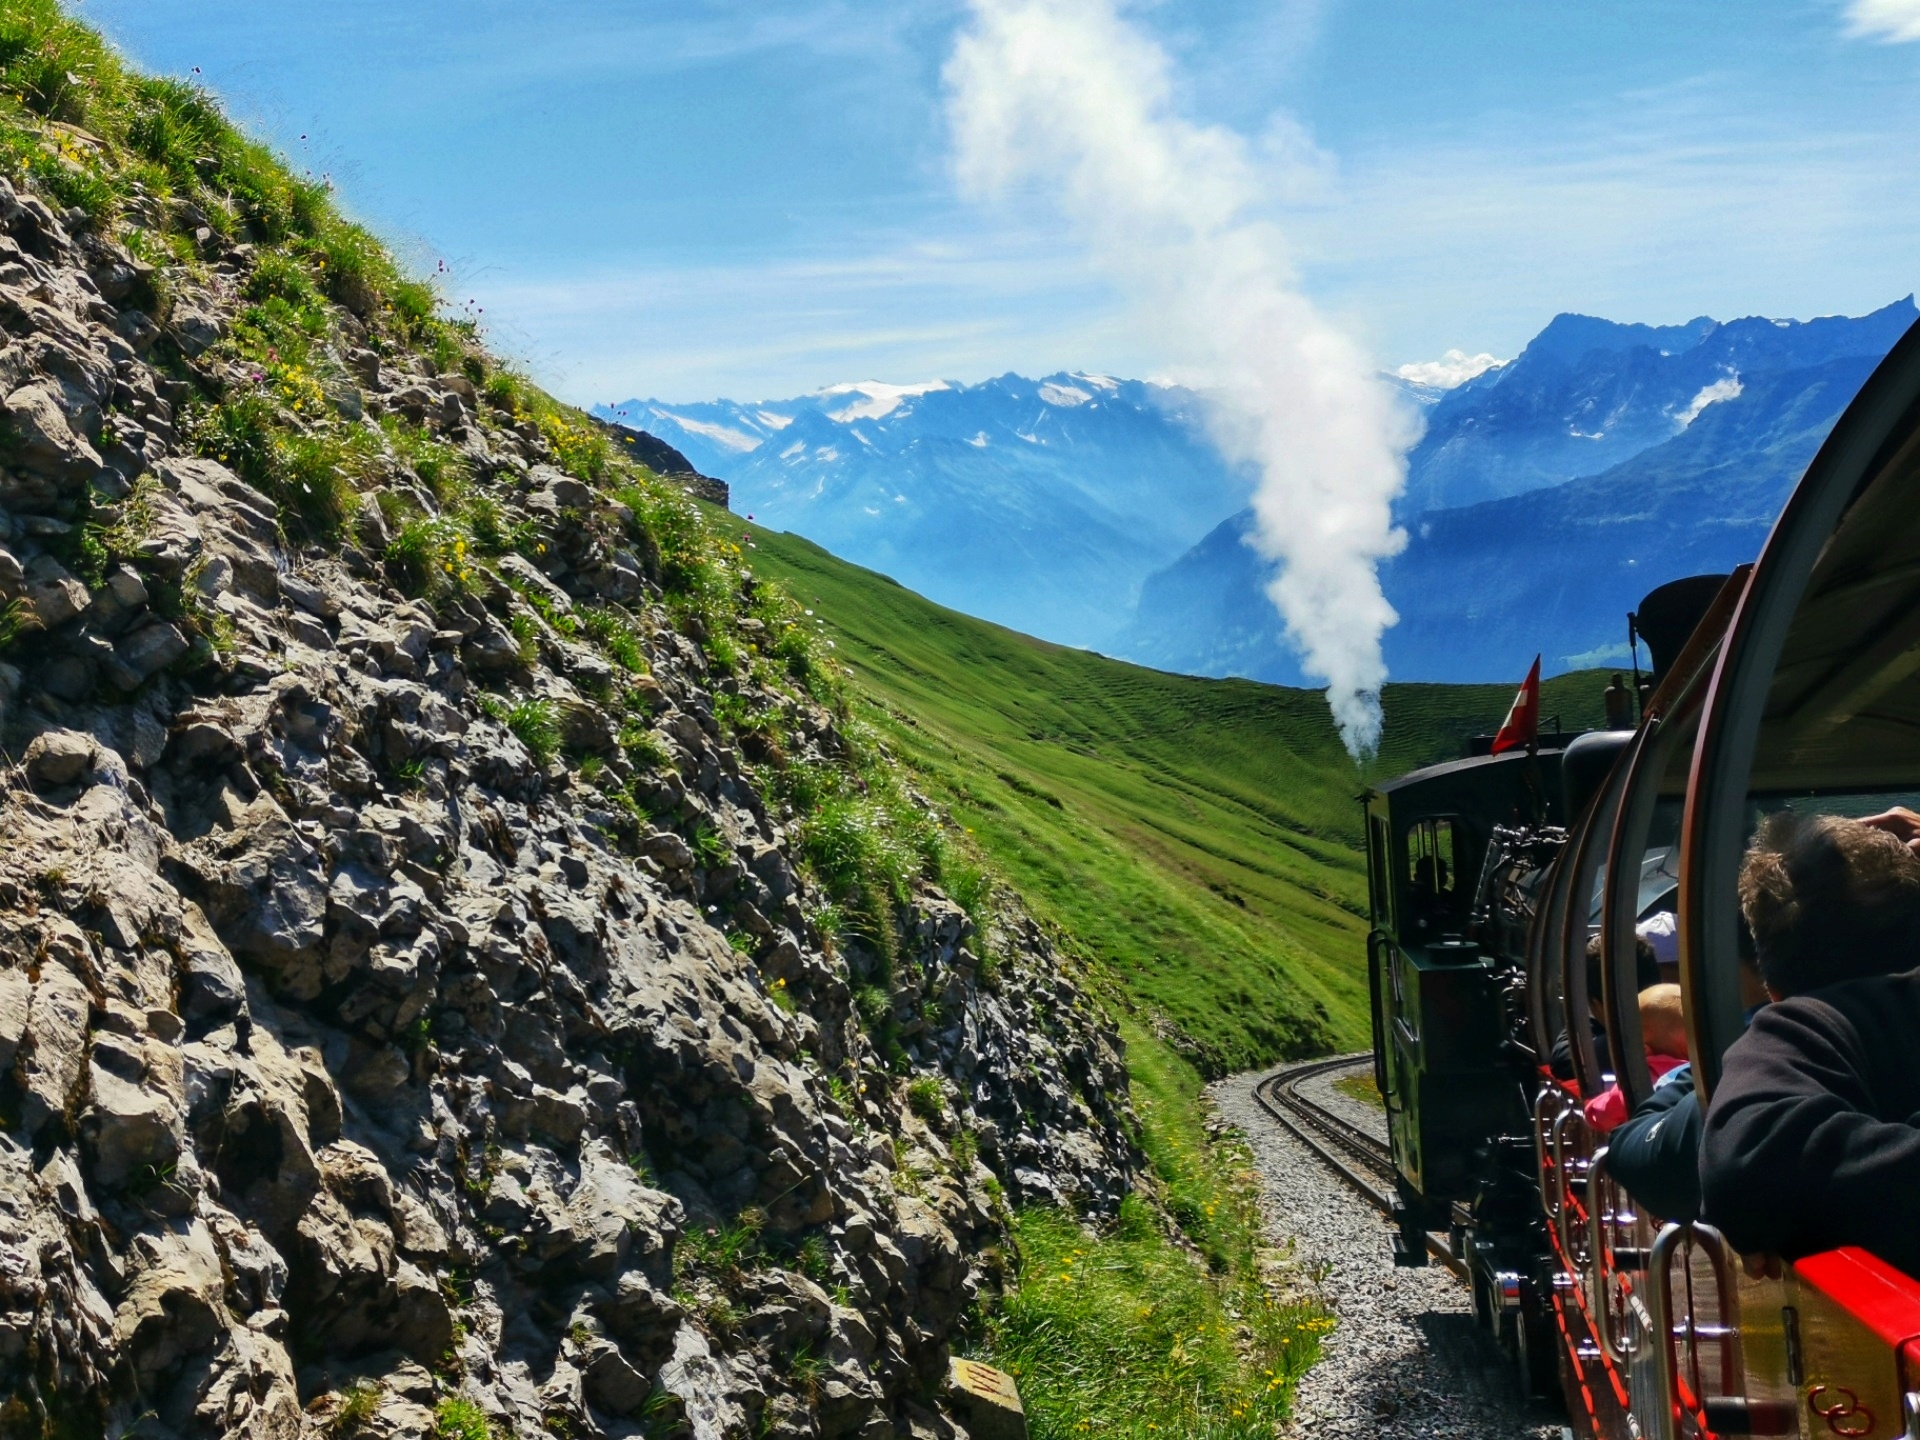 Töff, töff steam train… the ride on the steam locomotive is like a breathtaking journey through the mountains (c) Ariane Schild